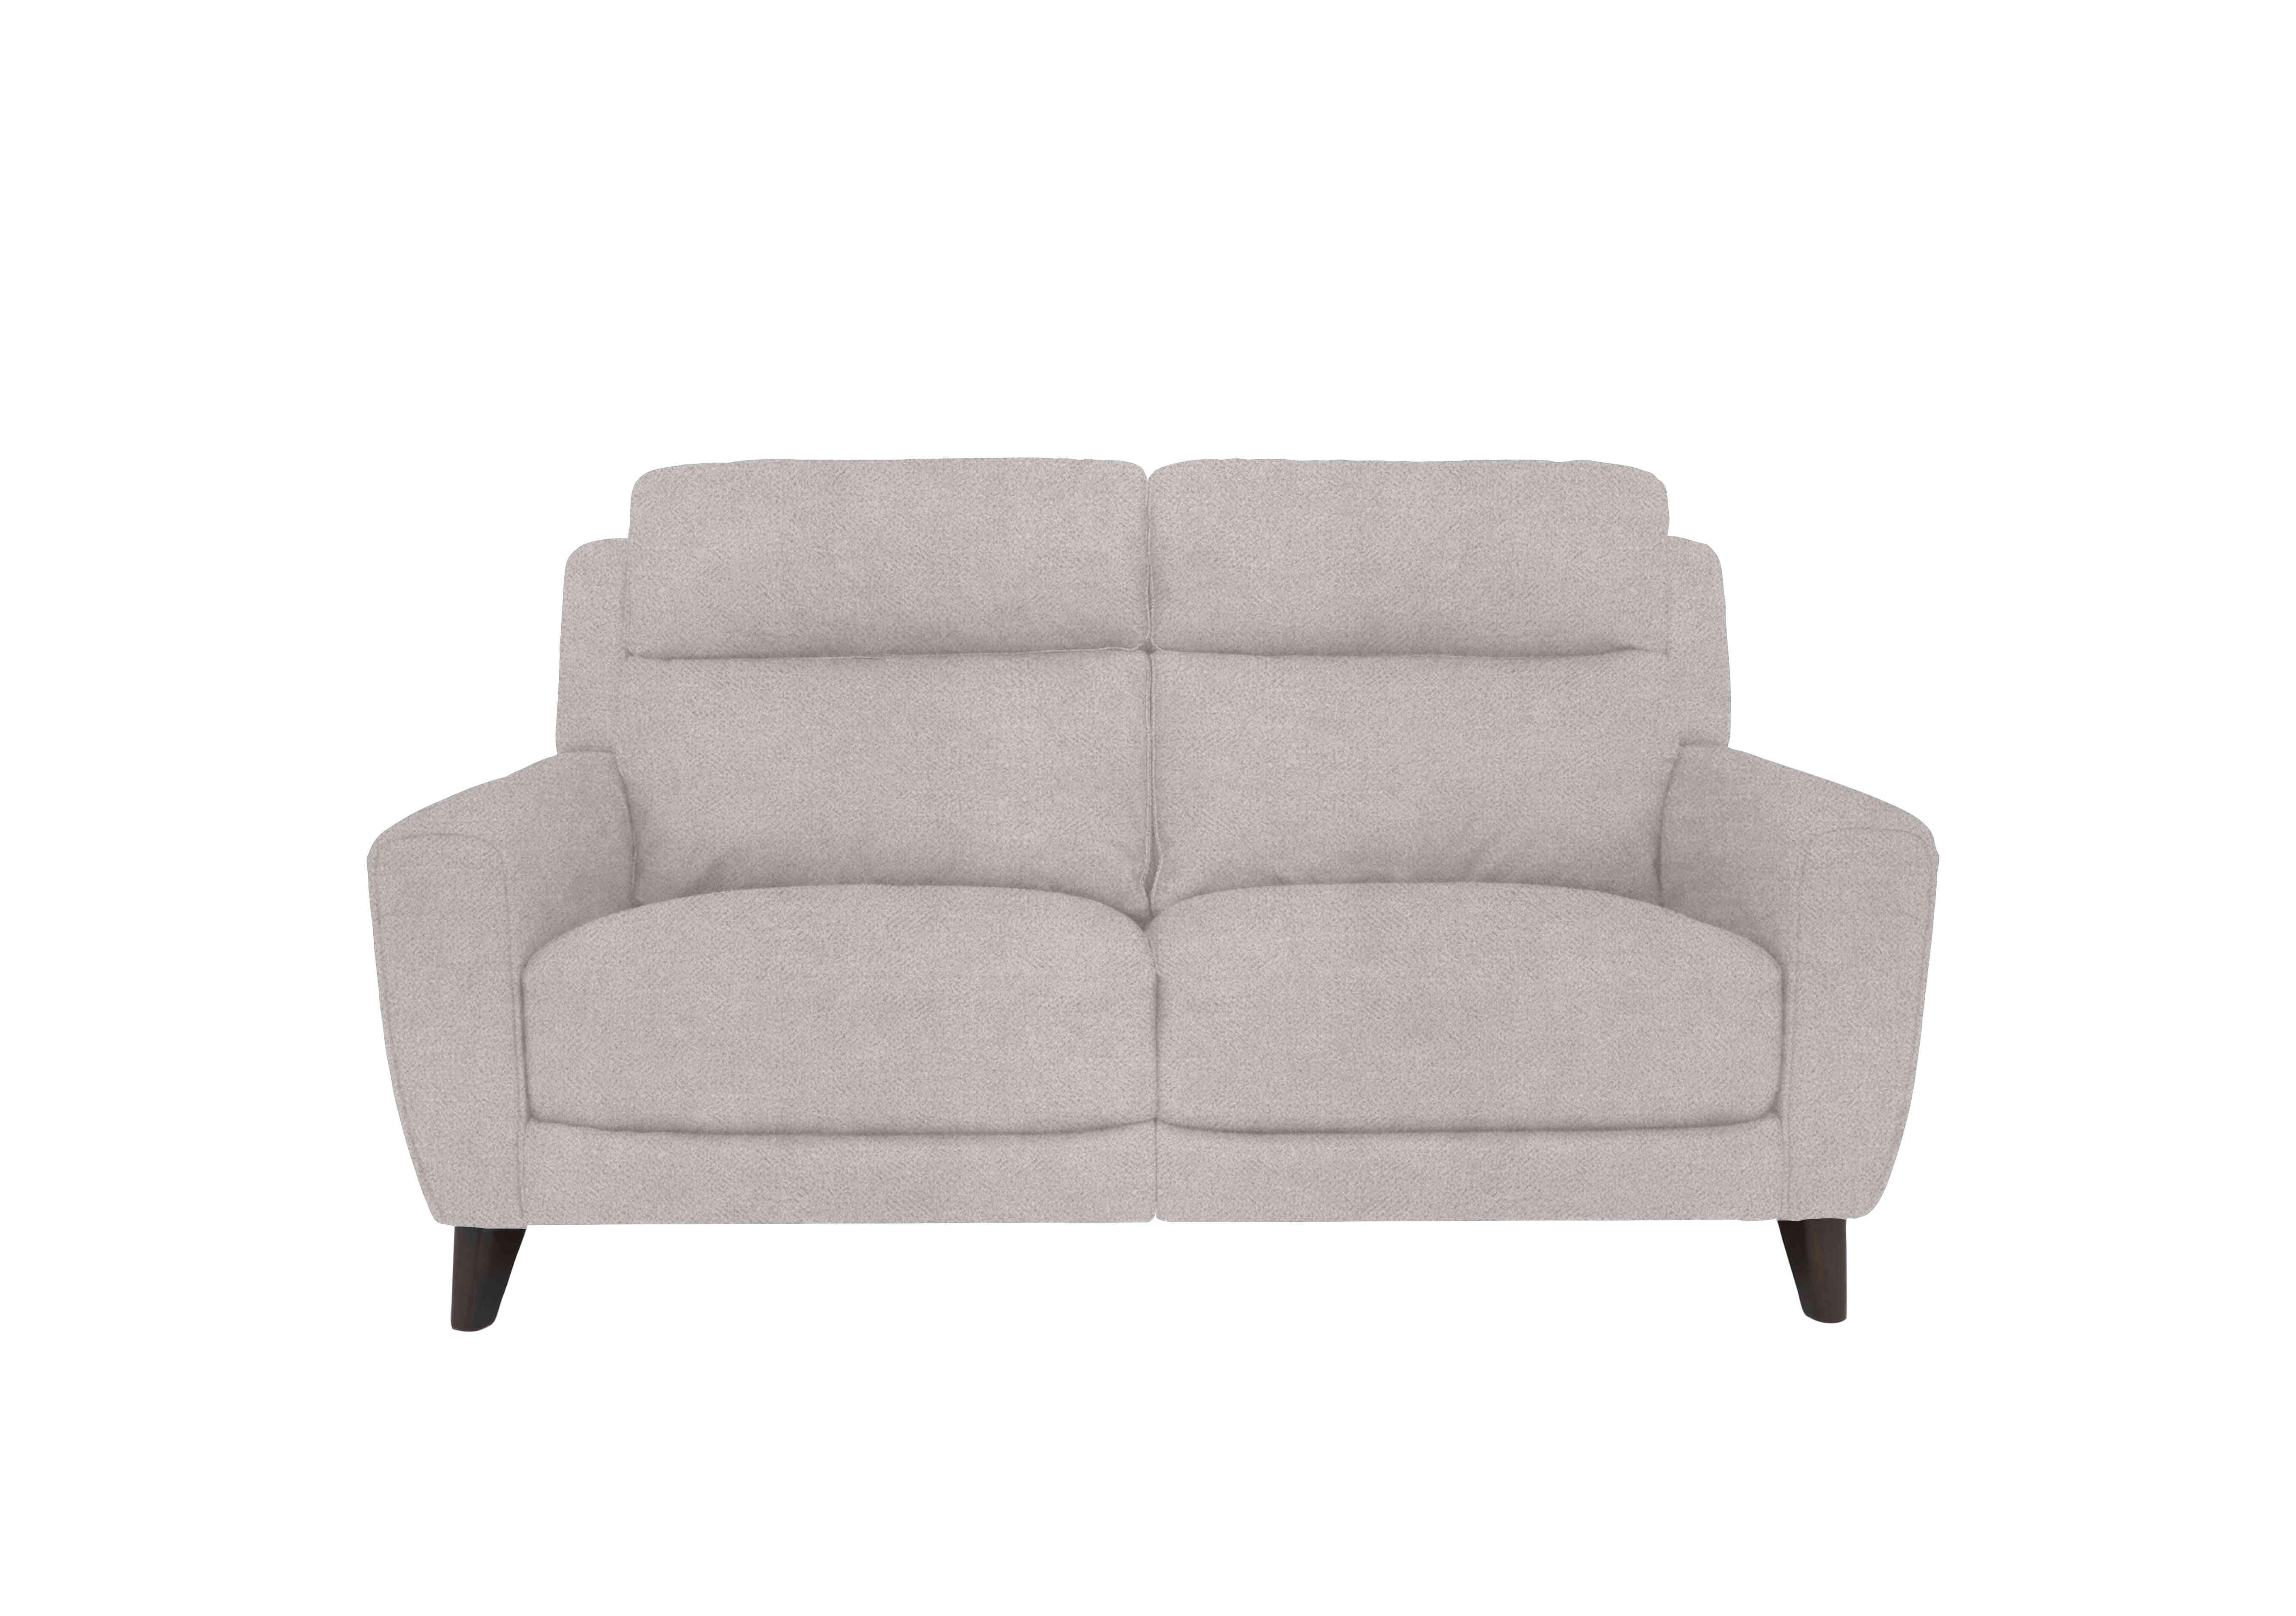 Zen 2 Seater Fabric Sofa in Fab-Meo-R23 Silver Grey on Furniture Village